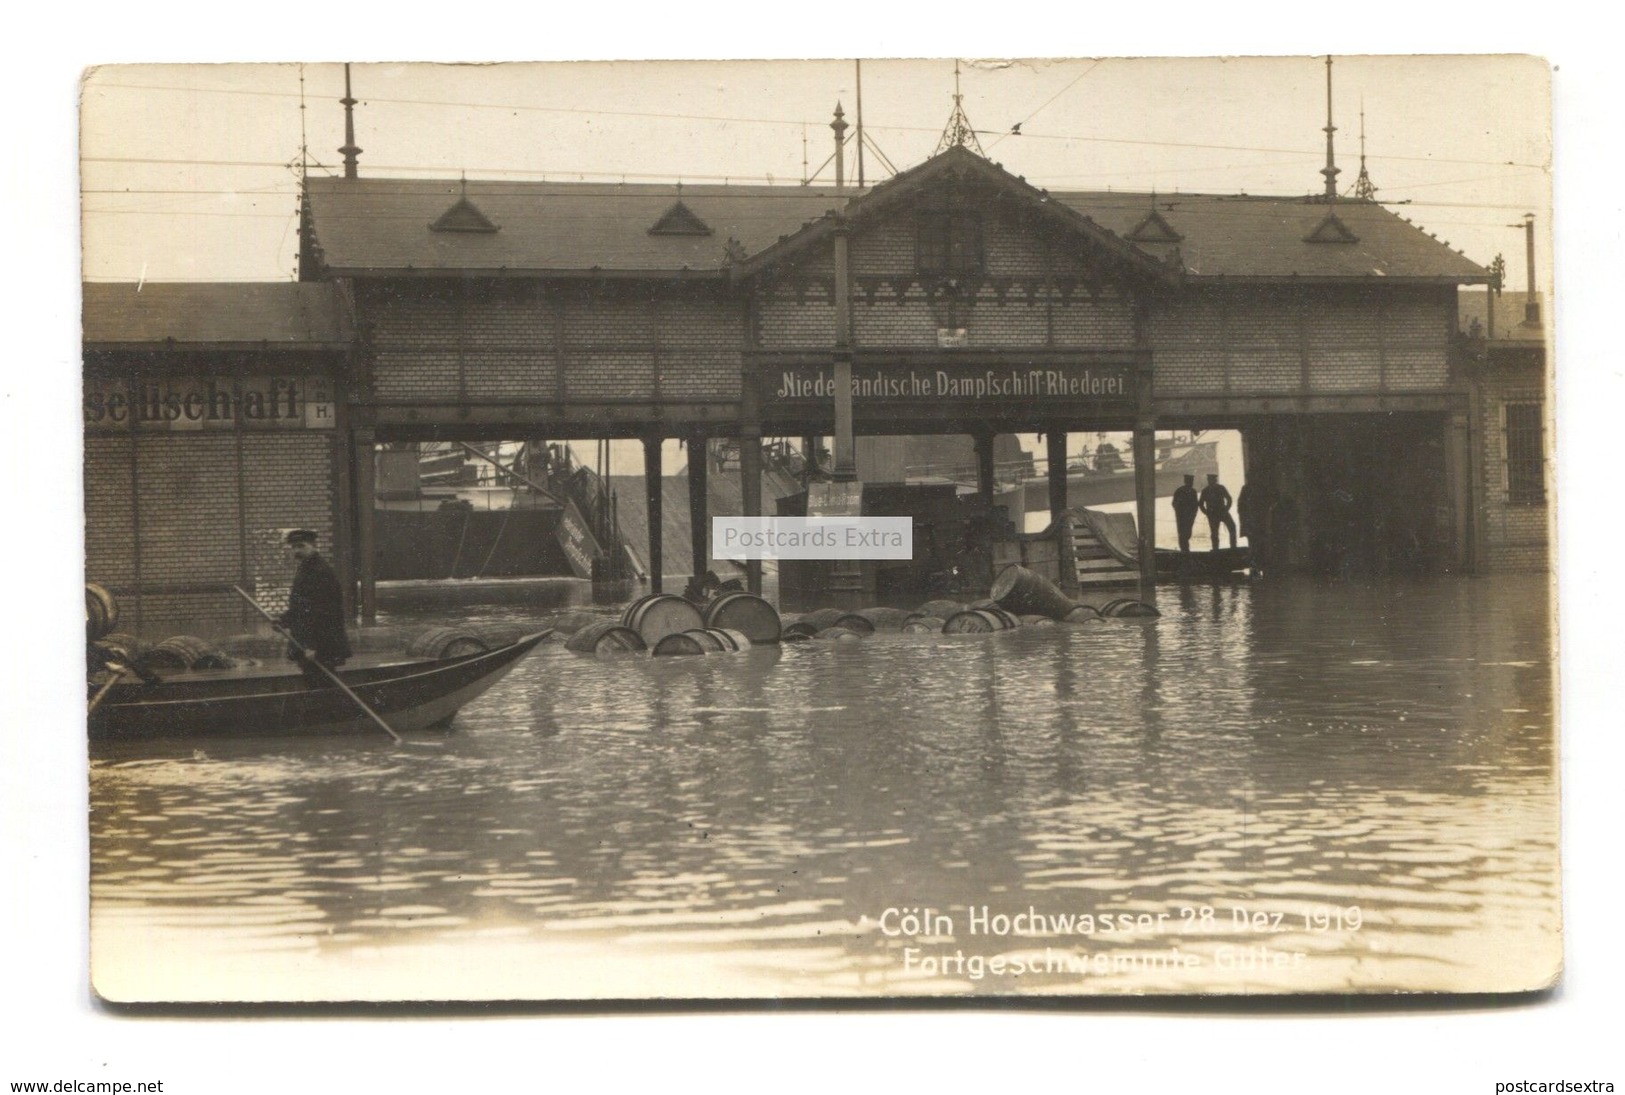 Coln, Koln, Cologne - Hochwasser 28 December, 1919 - Dampfschiff Landing Stage - Old Real Photo Postcard - Koeln